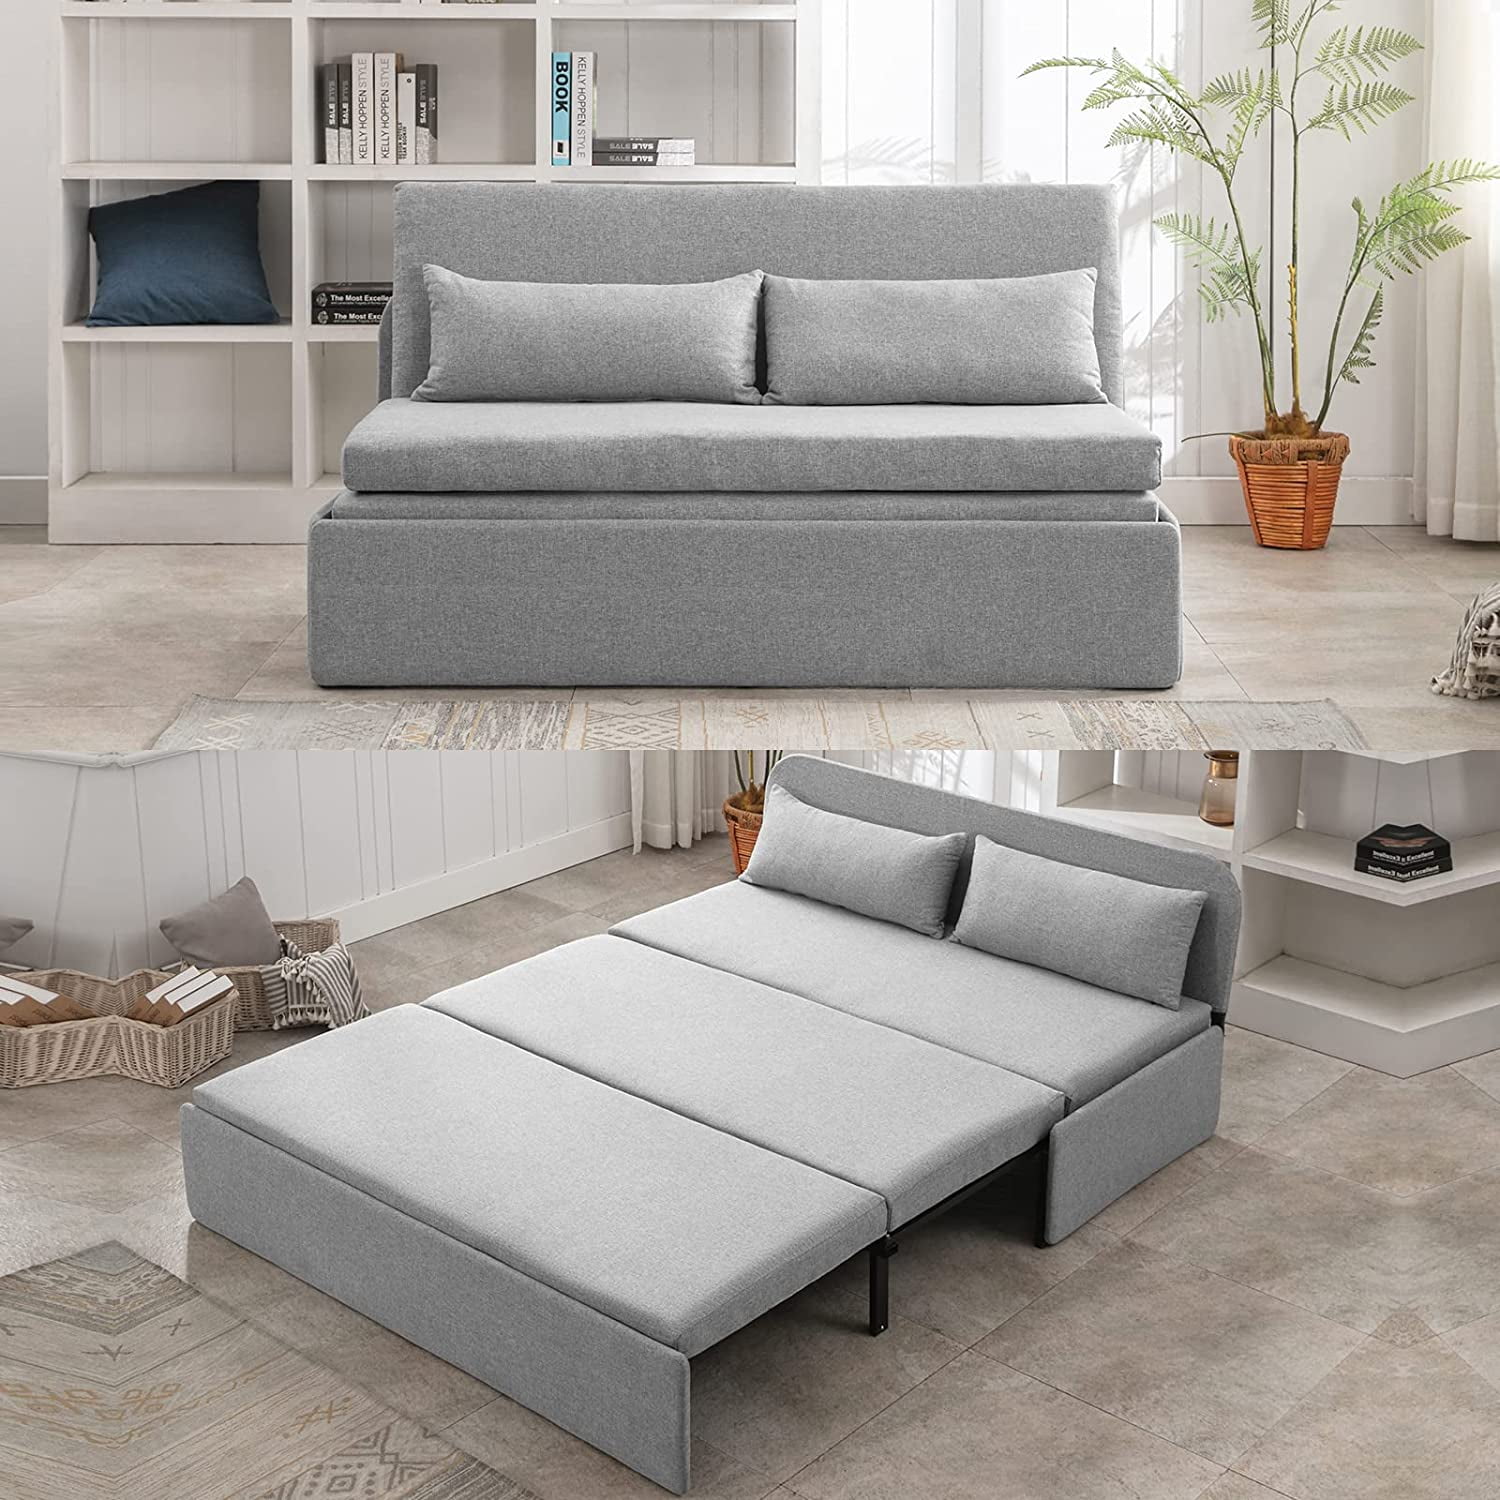 Mjkone Twin Size Convertible Sofa Bed